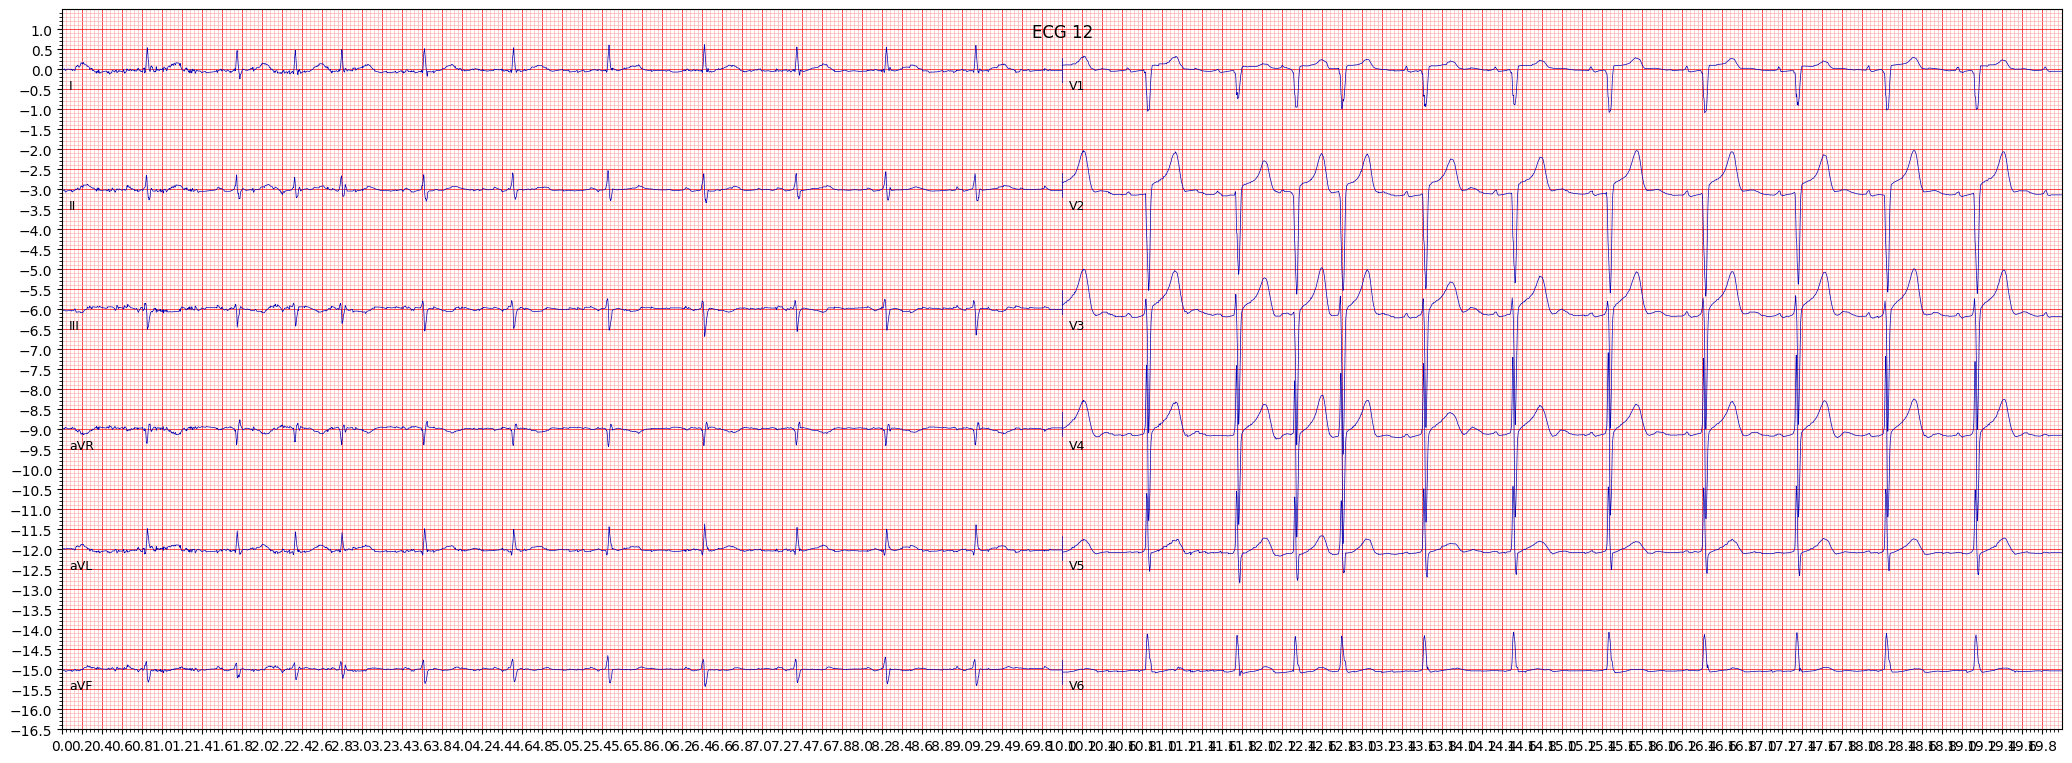 anterior myocardial infarction (AMI) example 7835